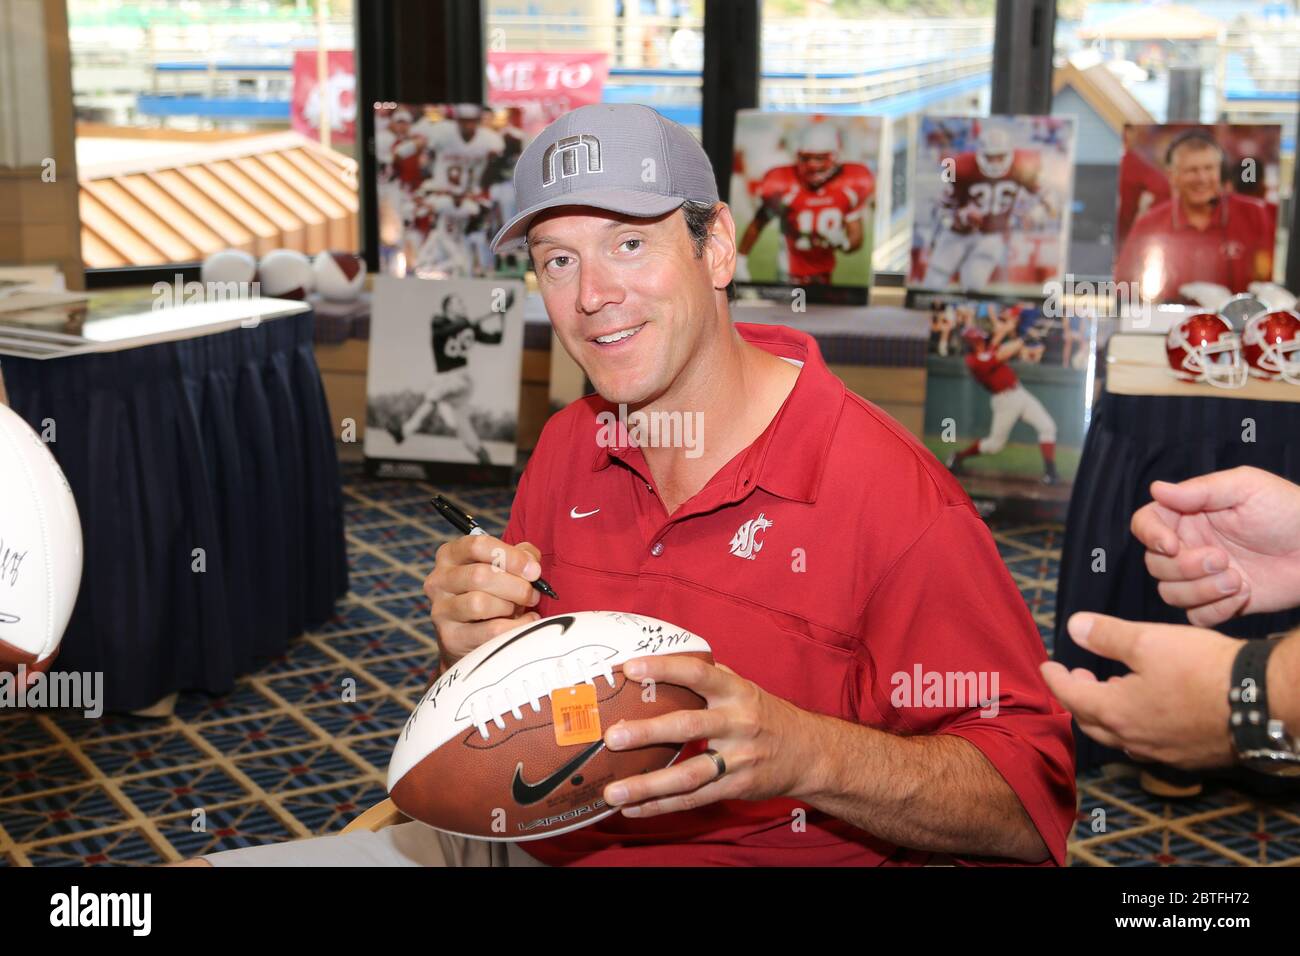 Drew Bledsoe, NFL legend quarterback, autographs footballs at an event for his alma mater, Washington State University. Stock Photo